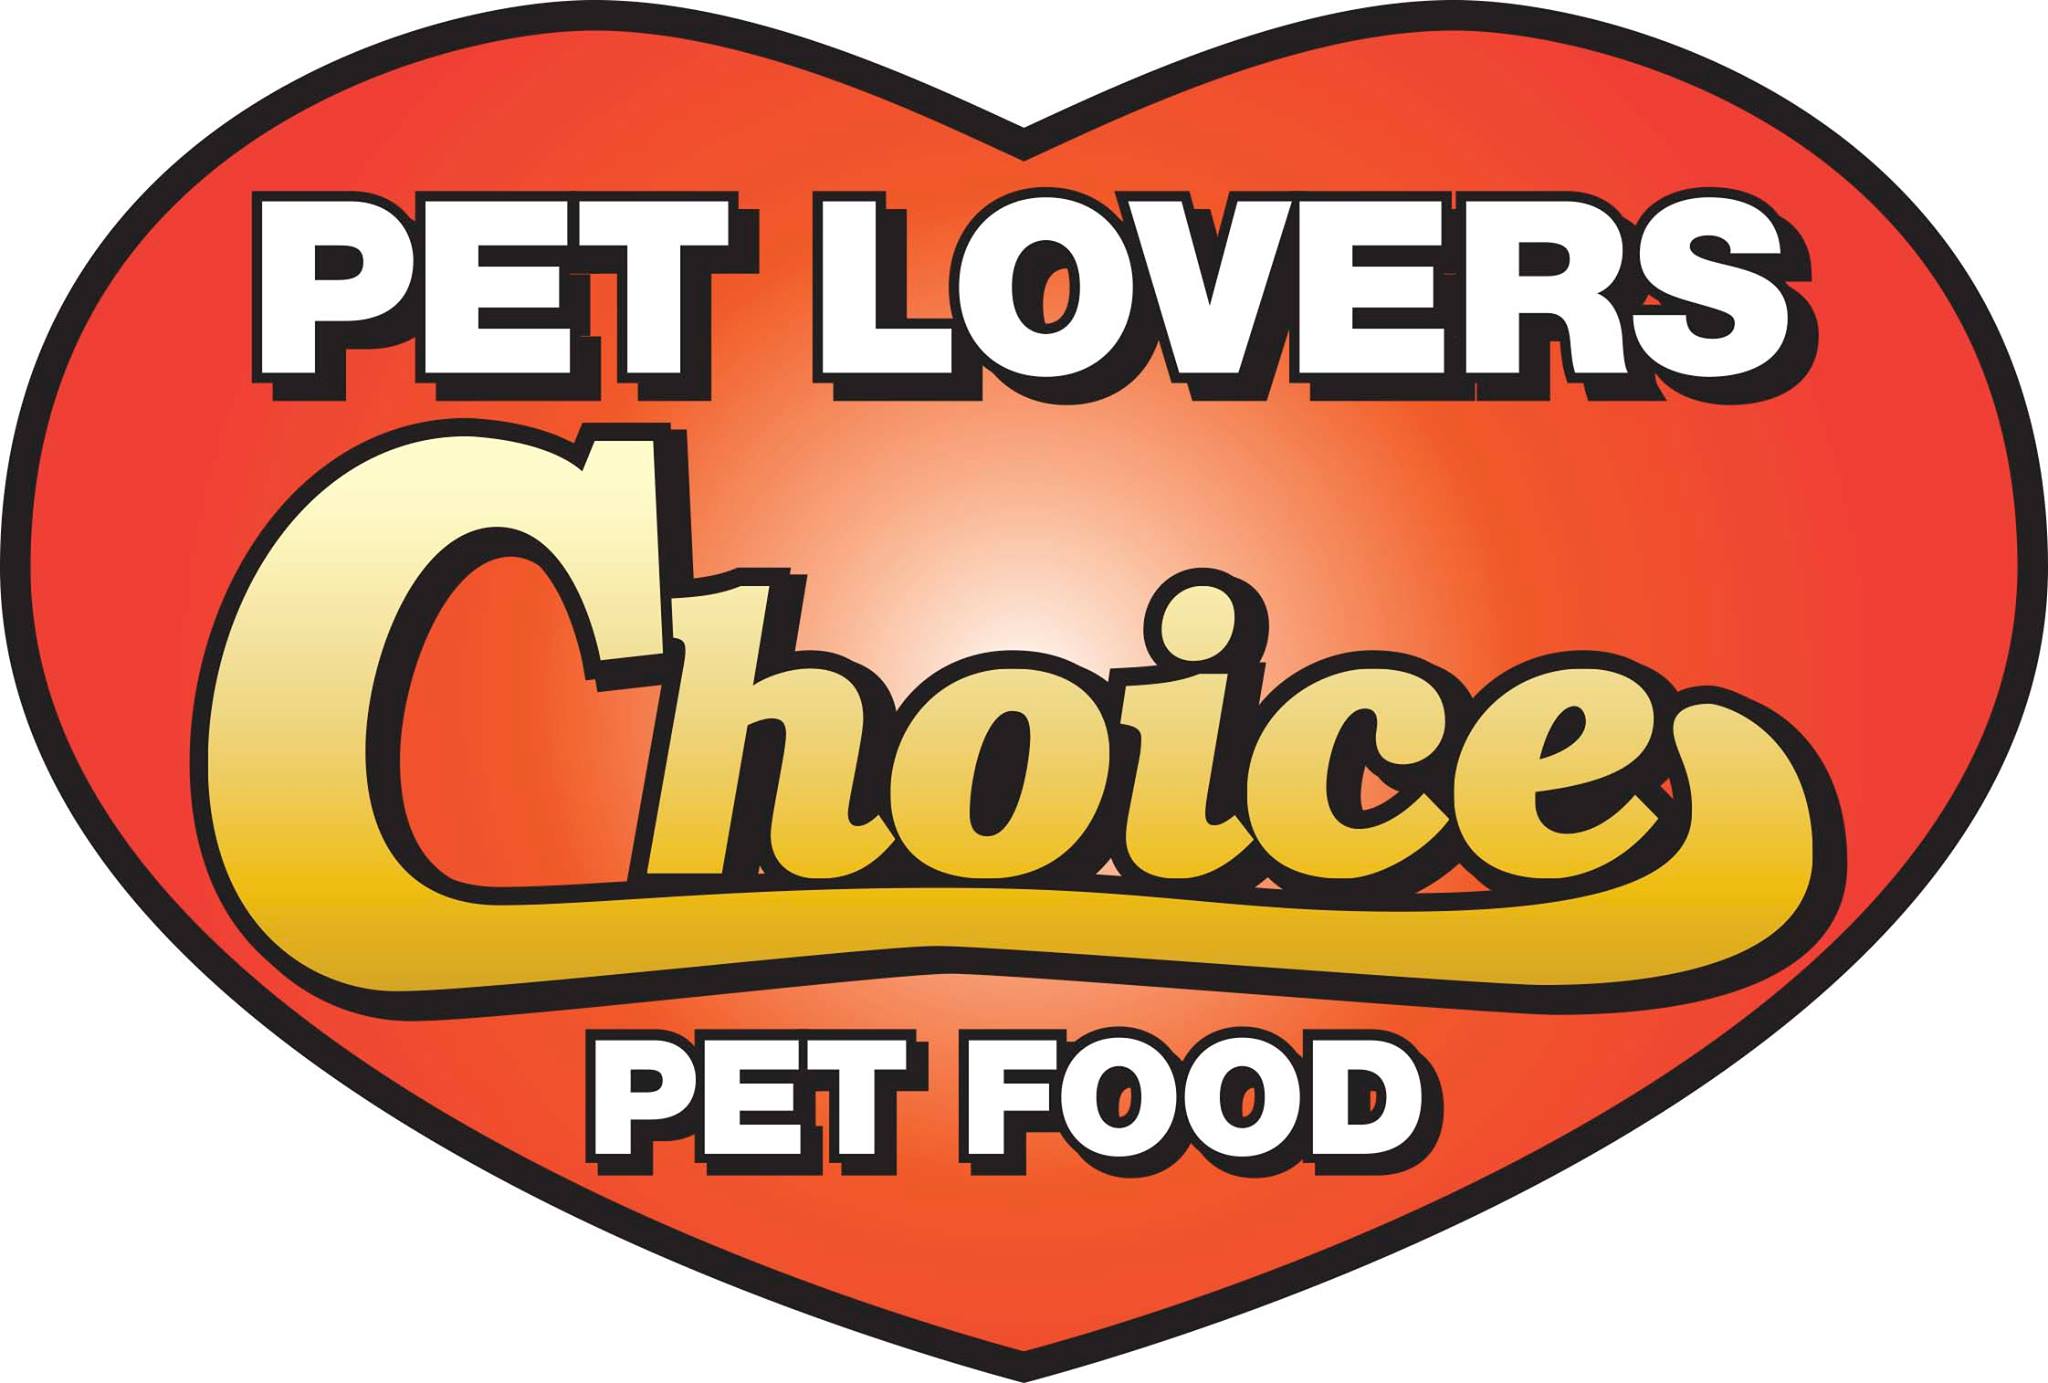 Pet Lovers' Choice - Ground Chicken Carcass - 5lbs